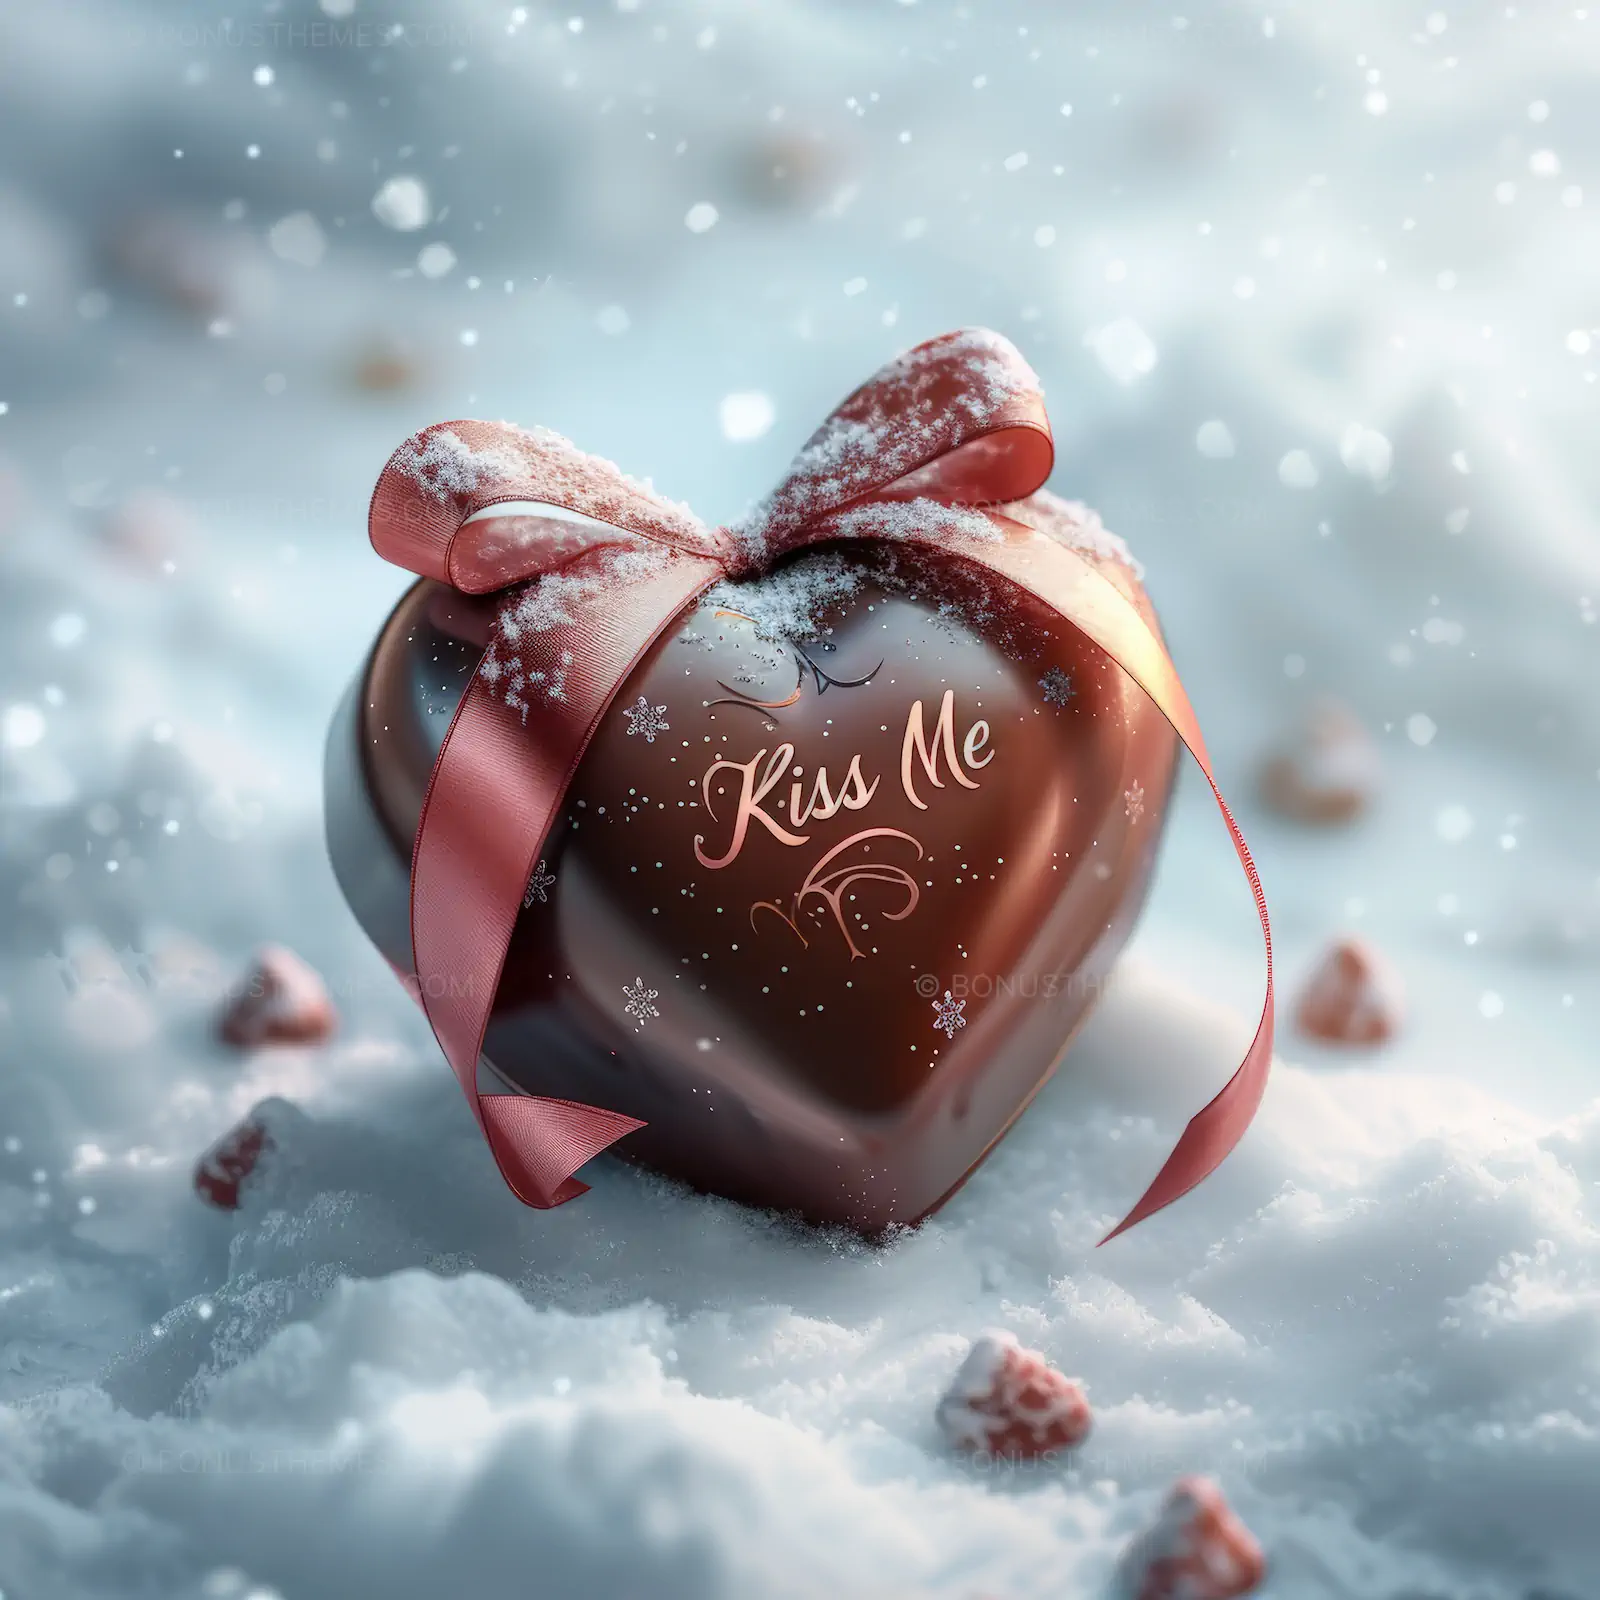 Sweet Valentine's Day chocolate treat